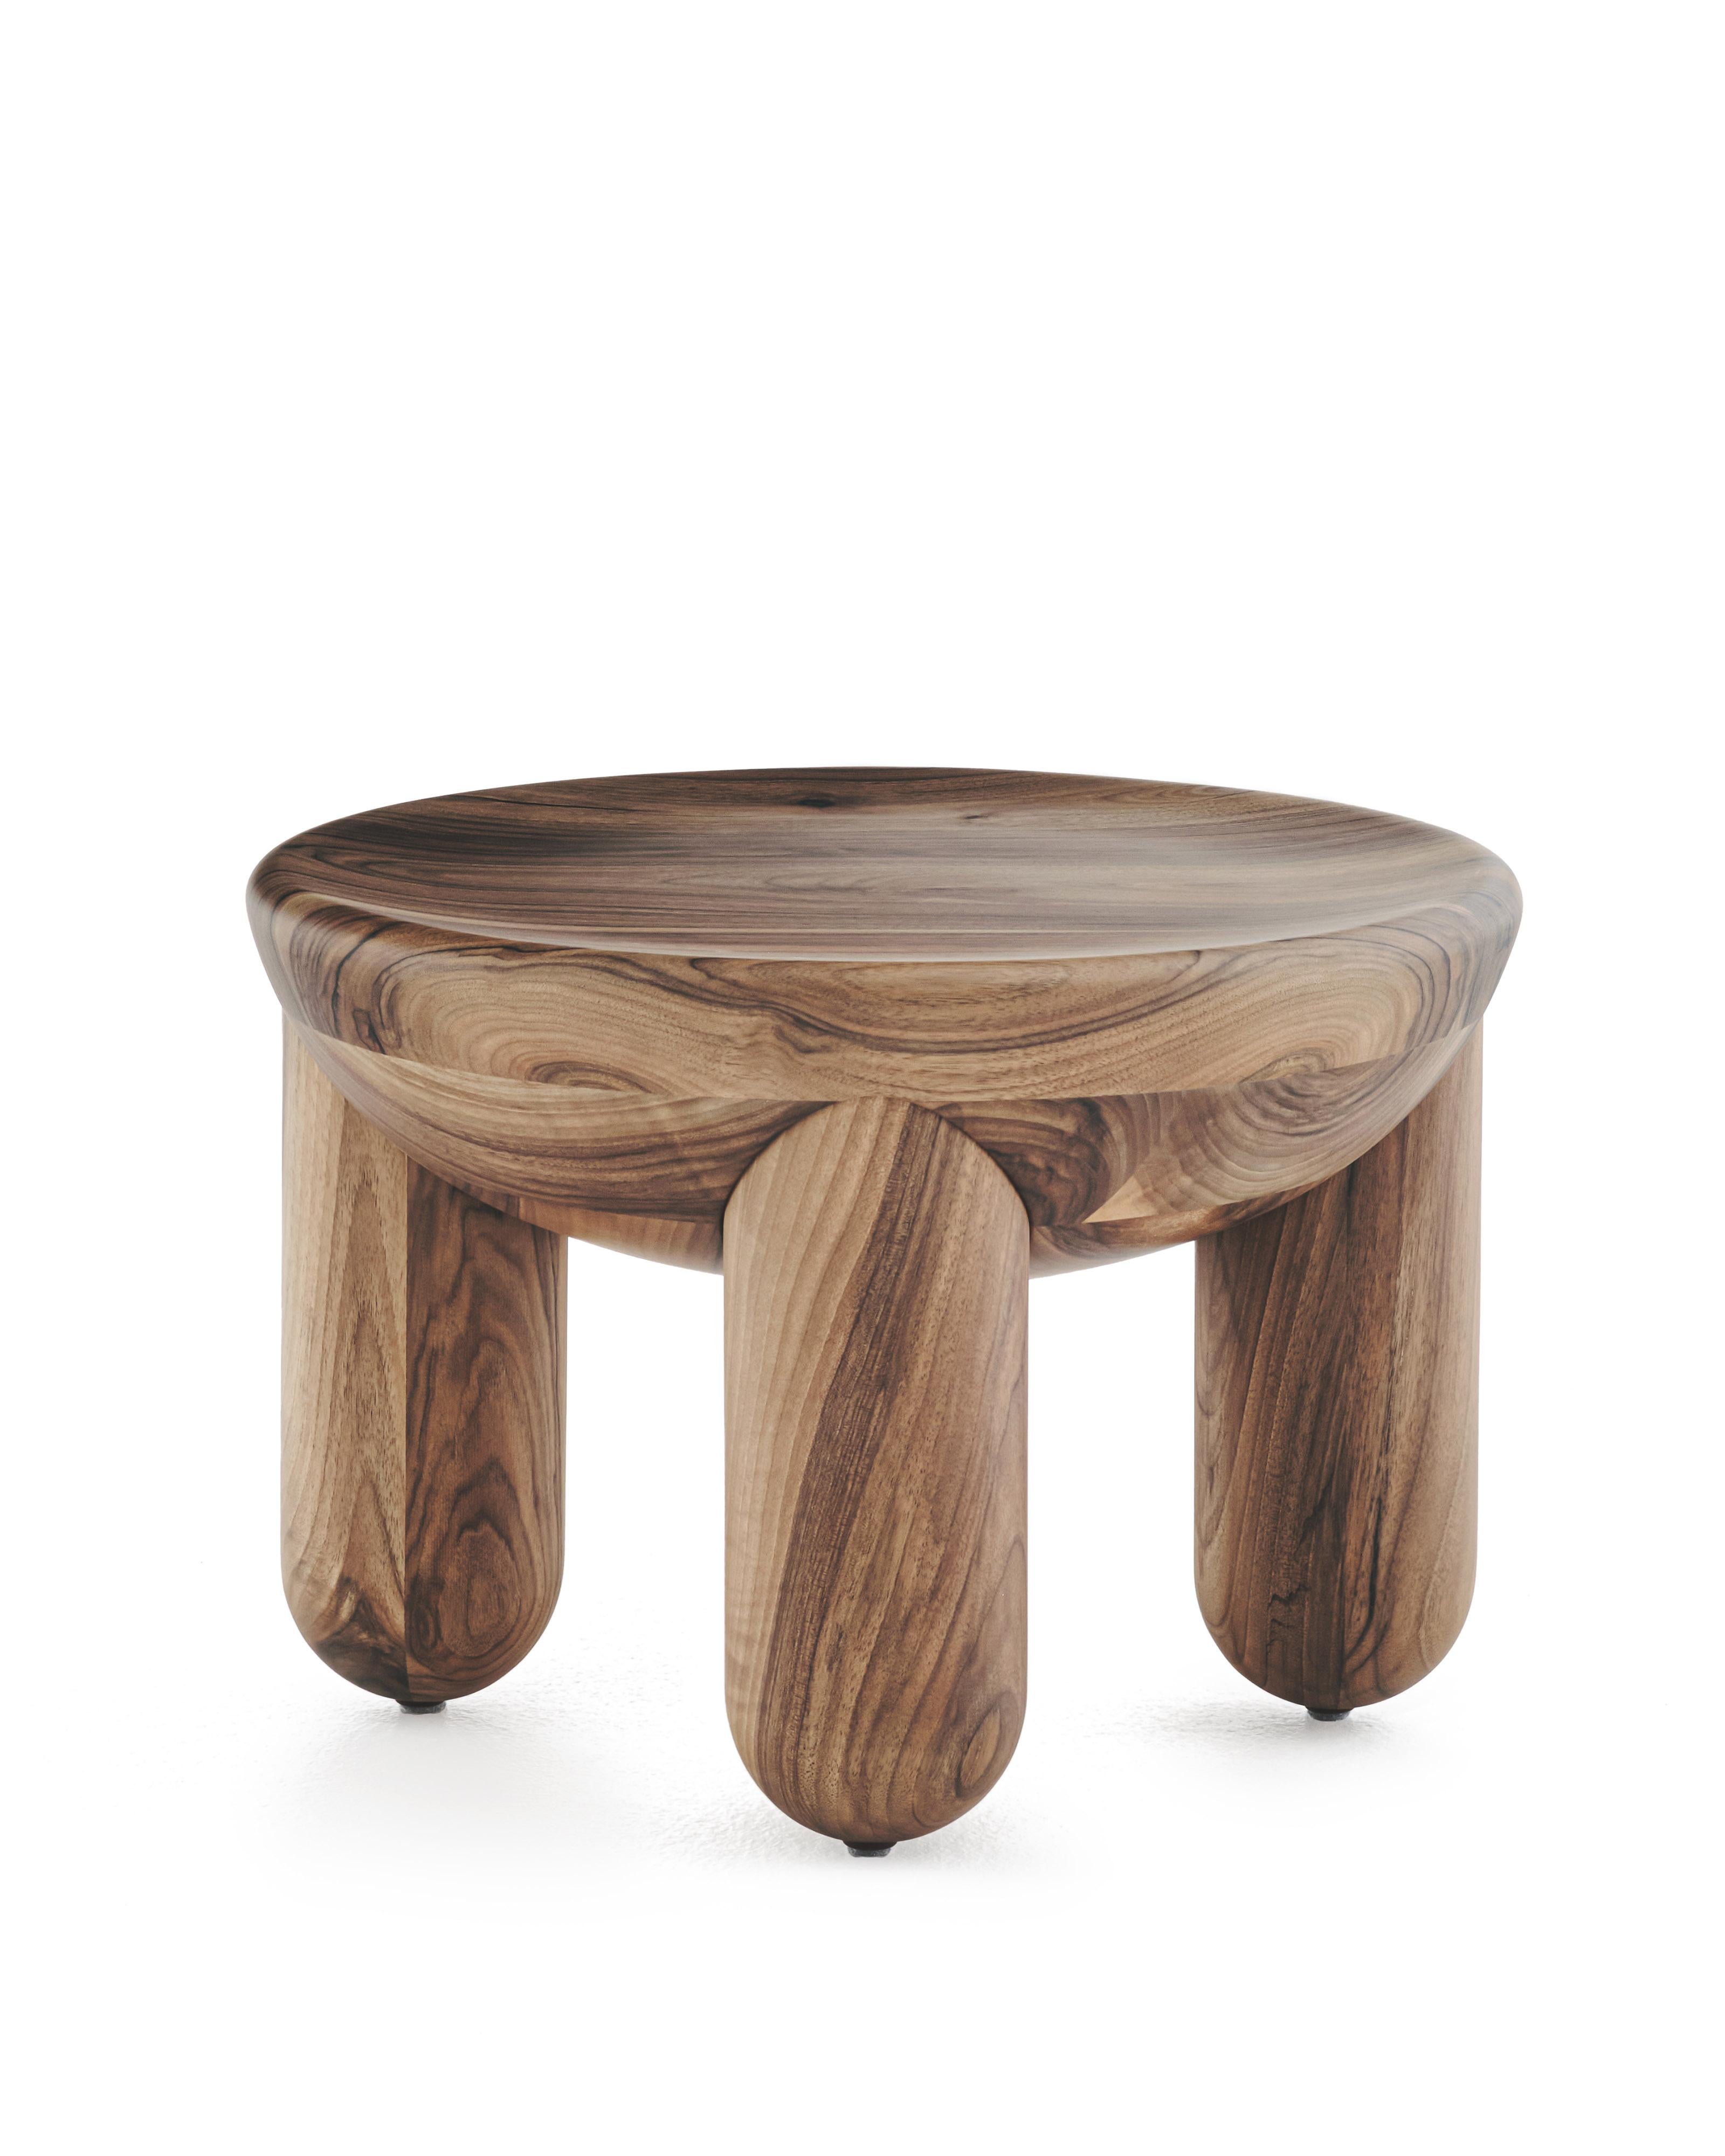 Modern Wooden Coffee Table Freyja 1 in Walnut Finish by Noom